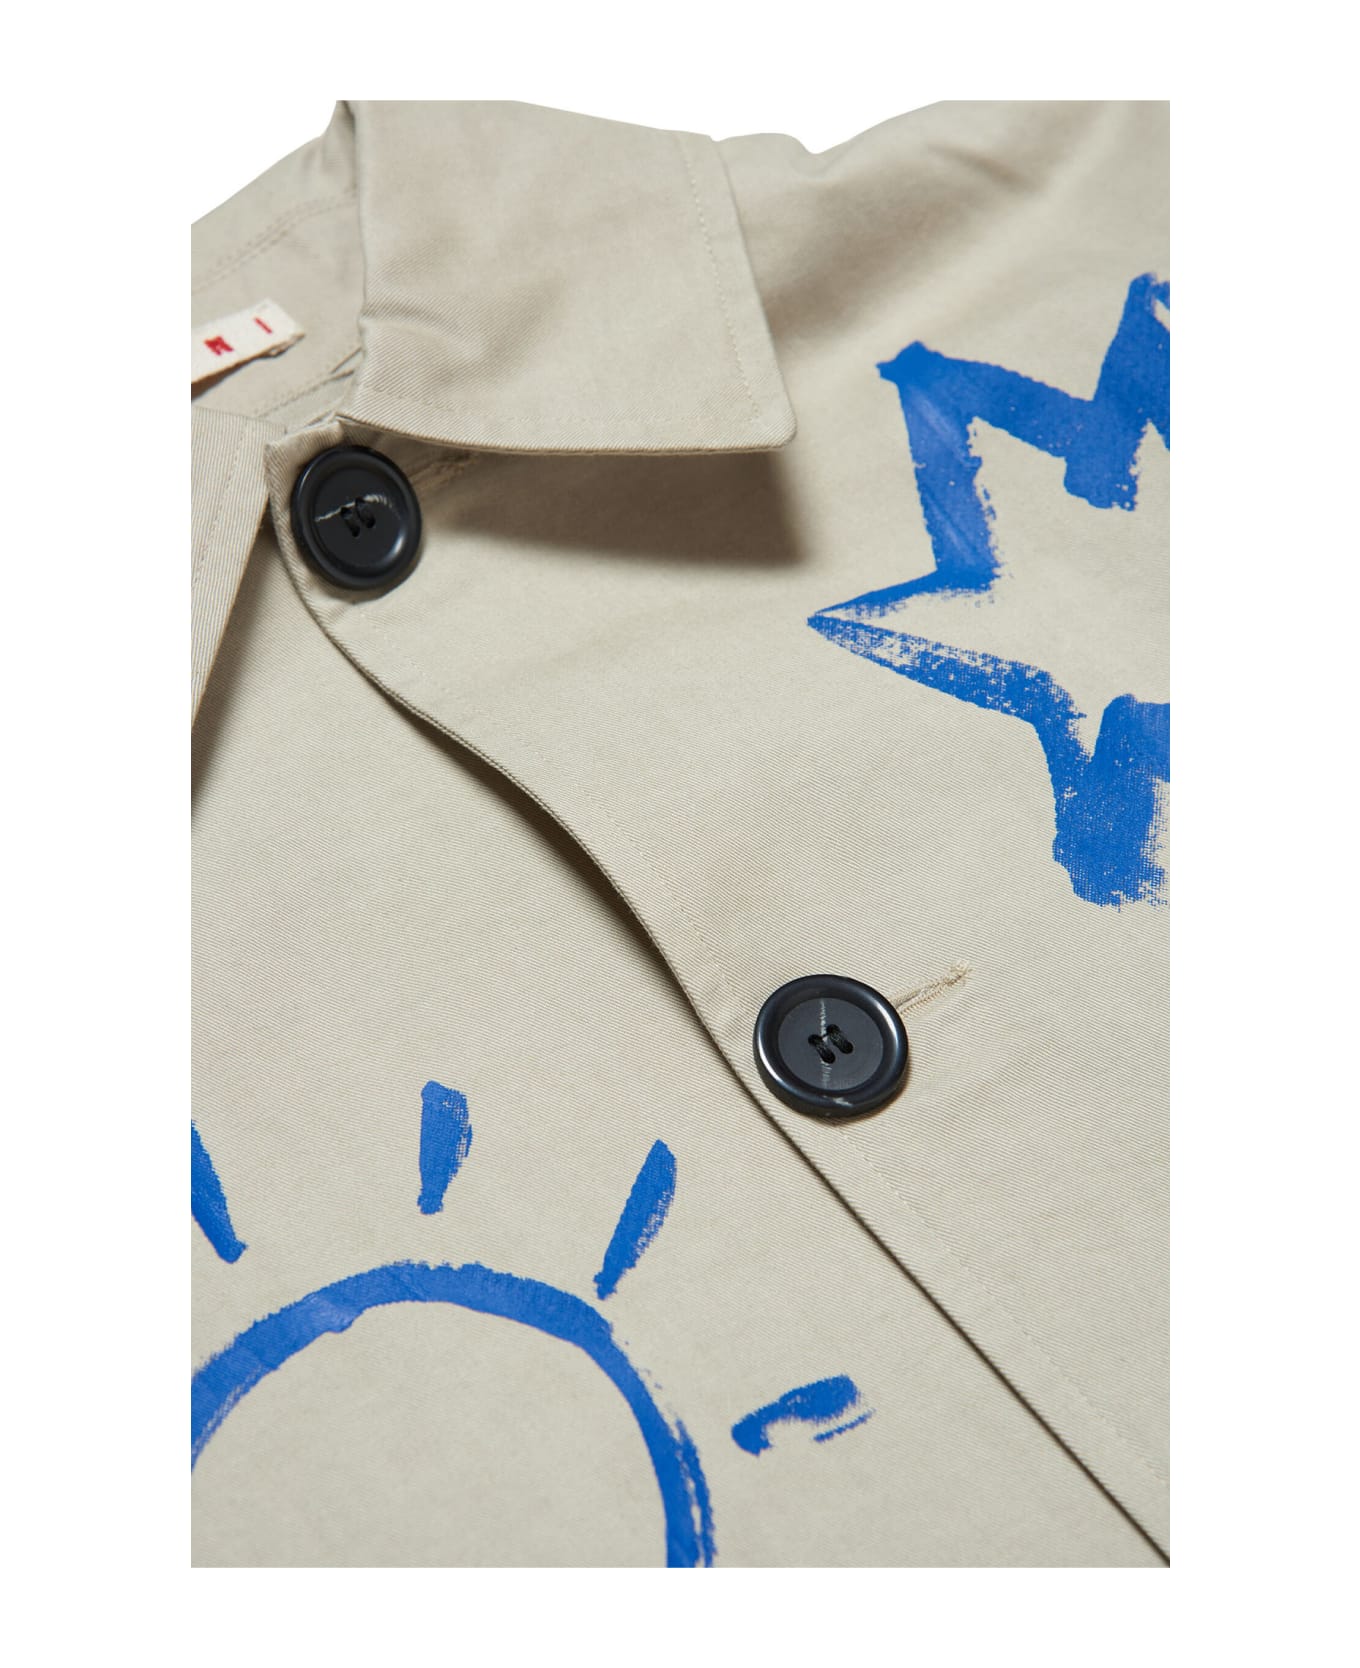 Marni Mj109f Jacket Marni Beige Gabardine Coat With Graffiti And Printed Faces - Light sand